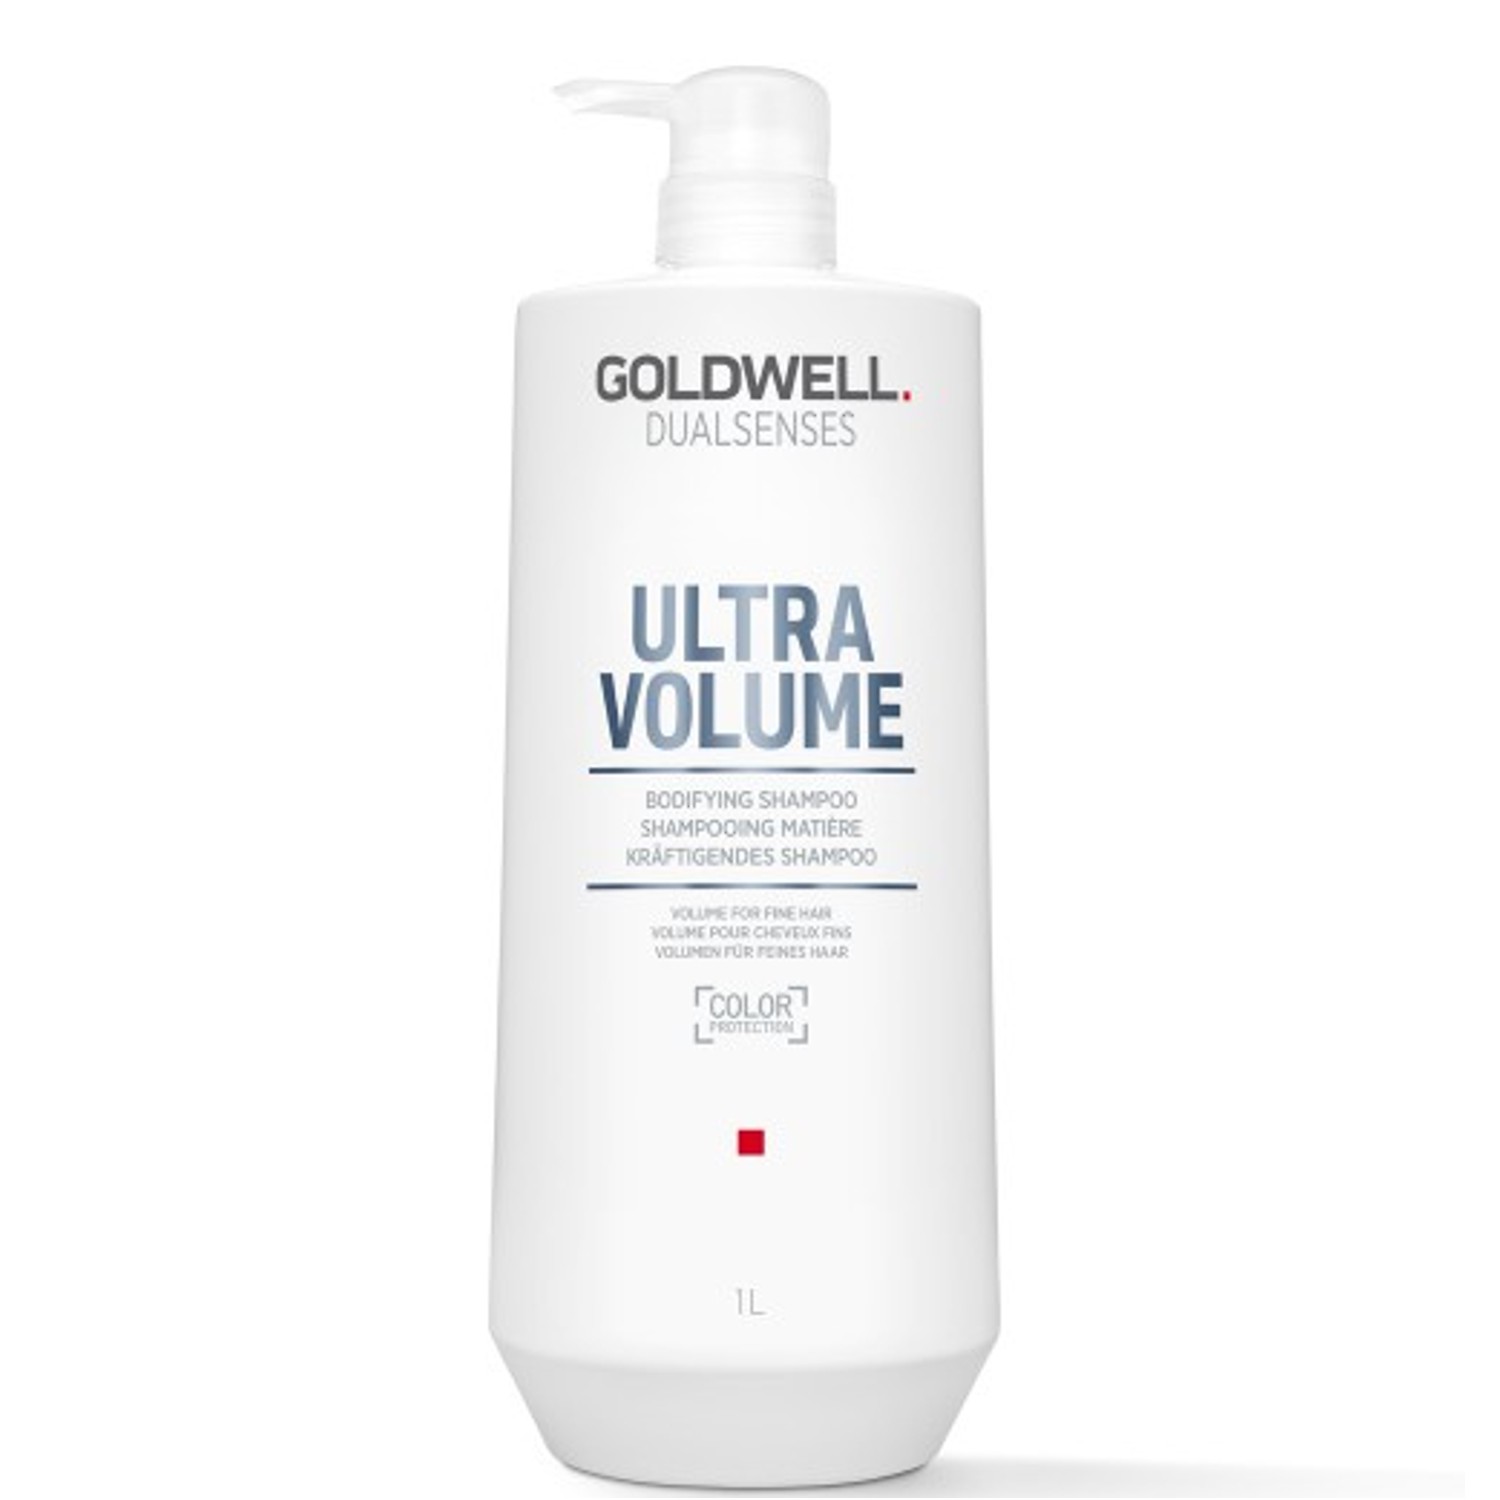 GOLDWELL Dualsenses Ultra Volume Bodifying Shampoo 1 L